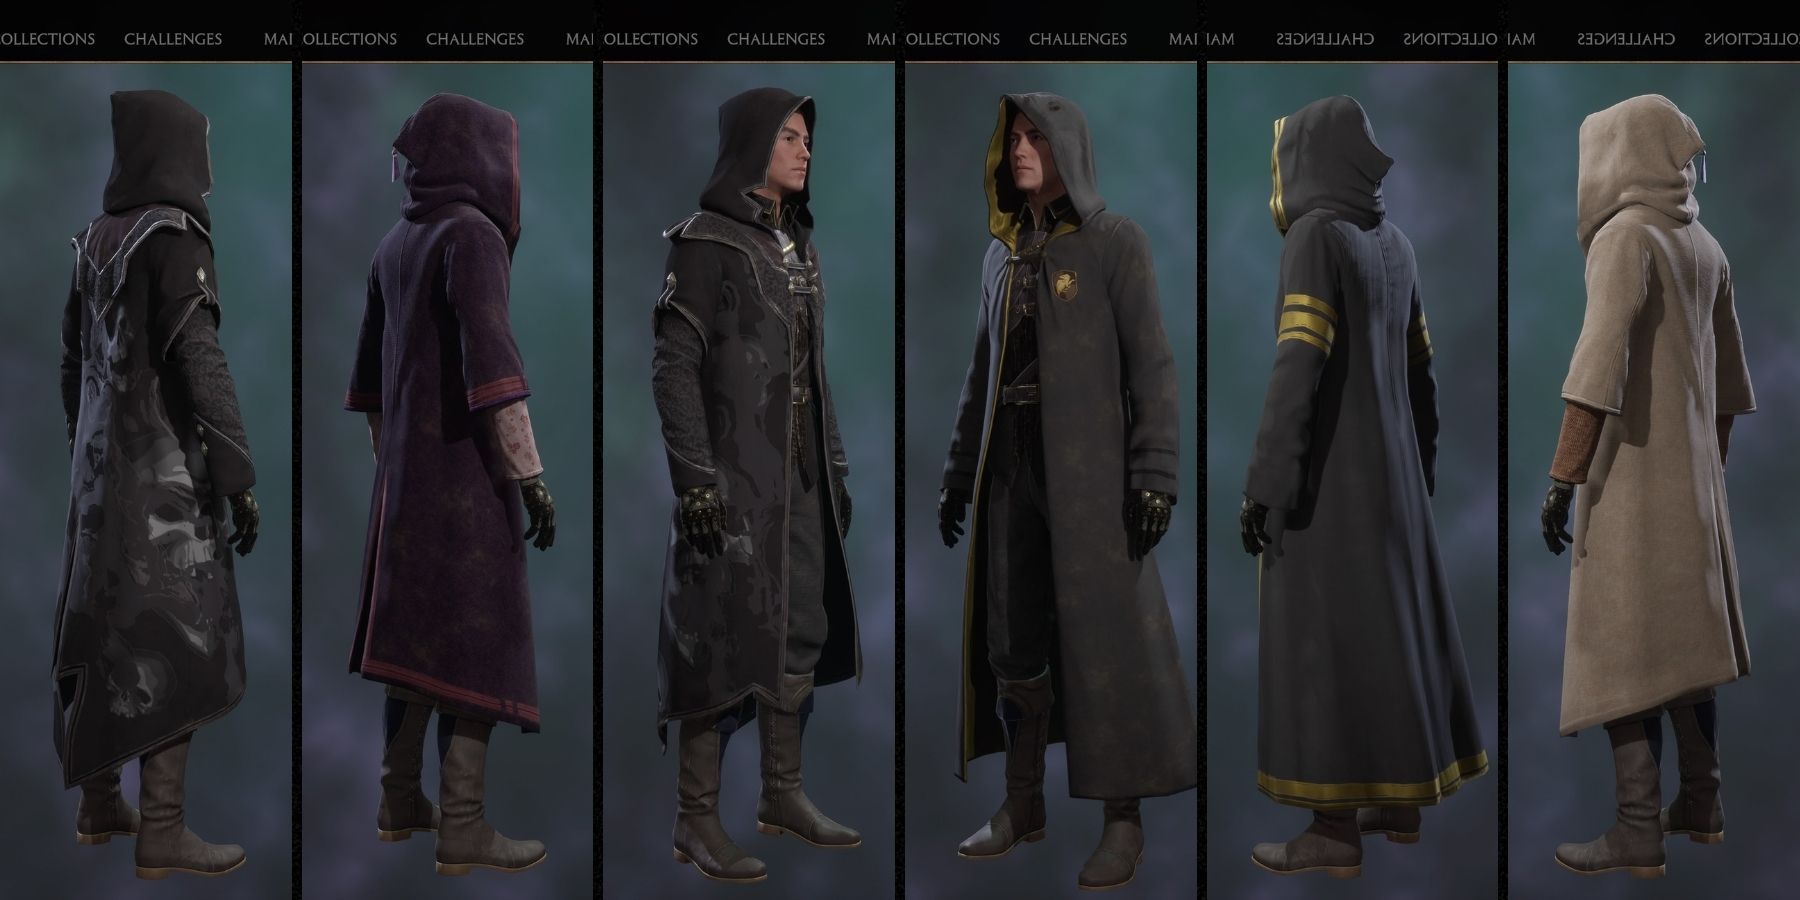 dark arts robe hogwarts legacy